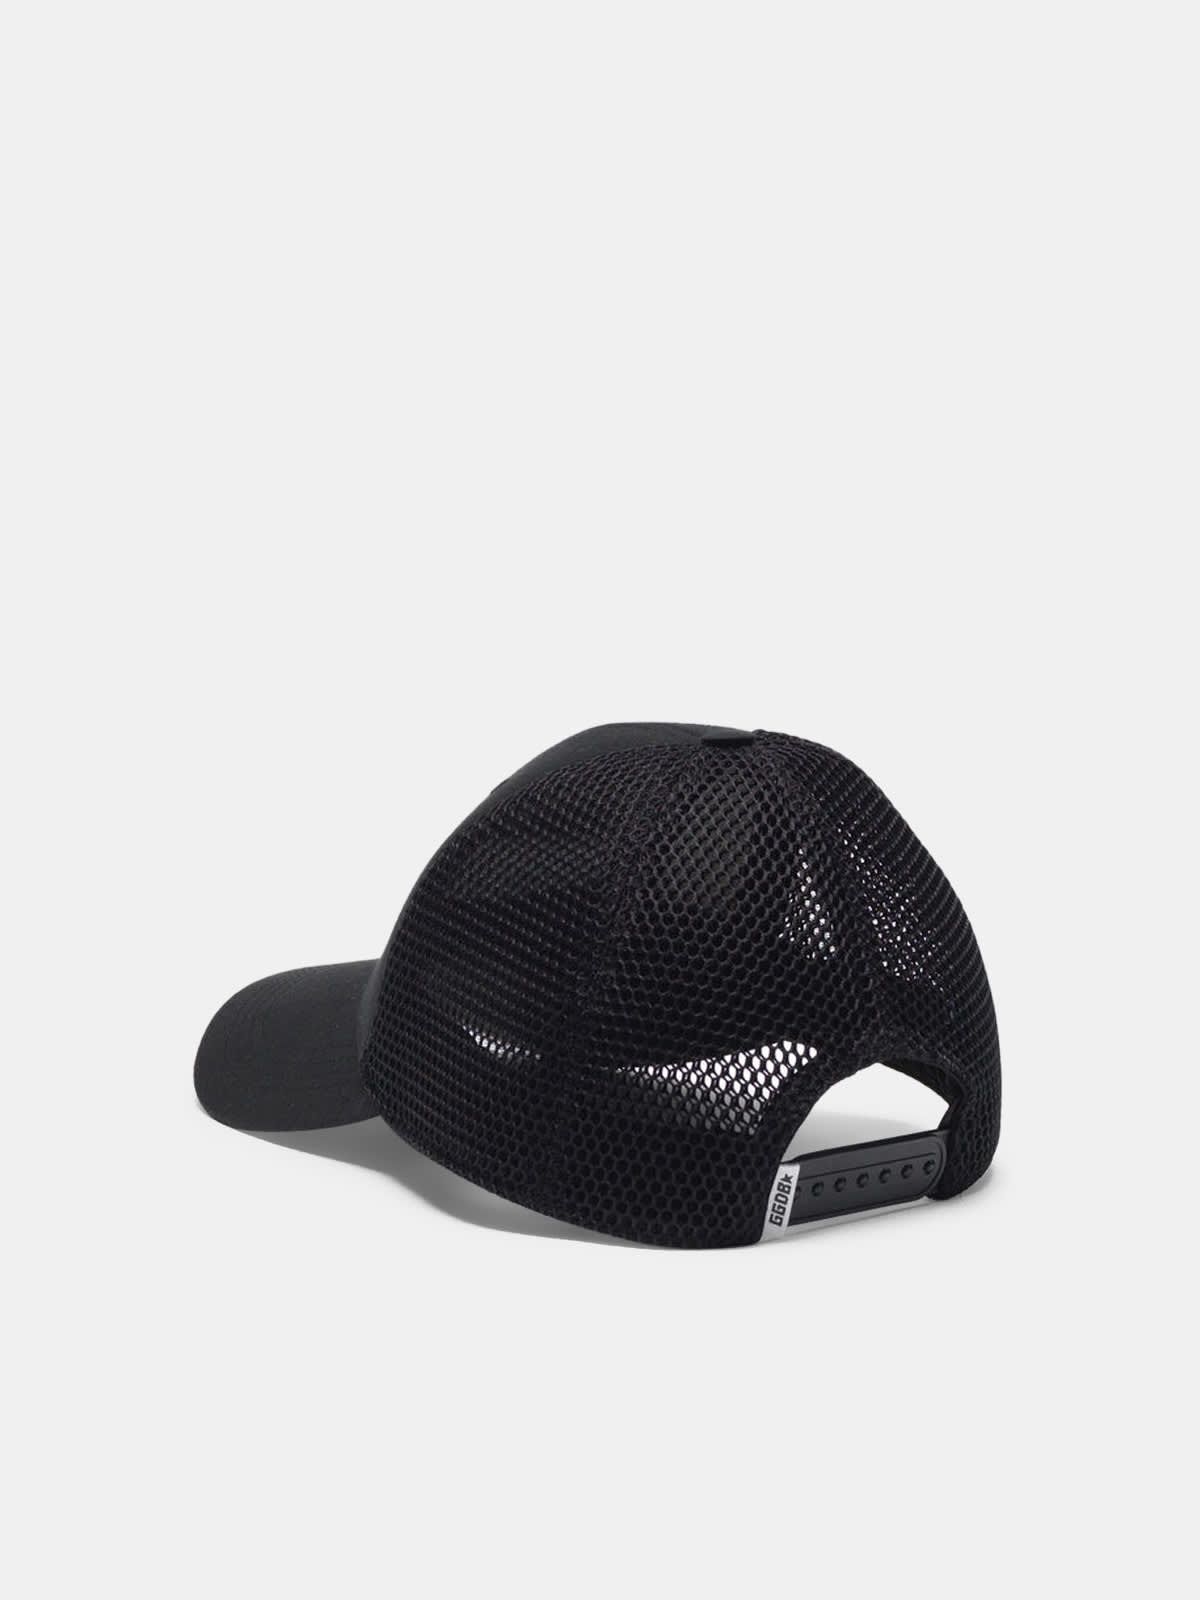 Black Savannah baseball cap with embroidered logo